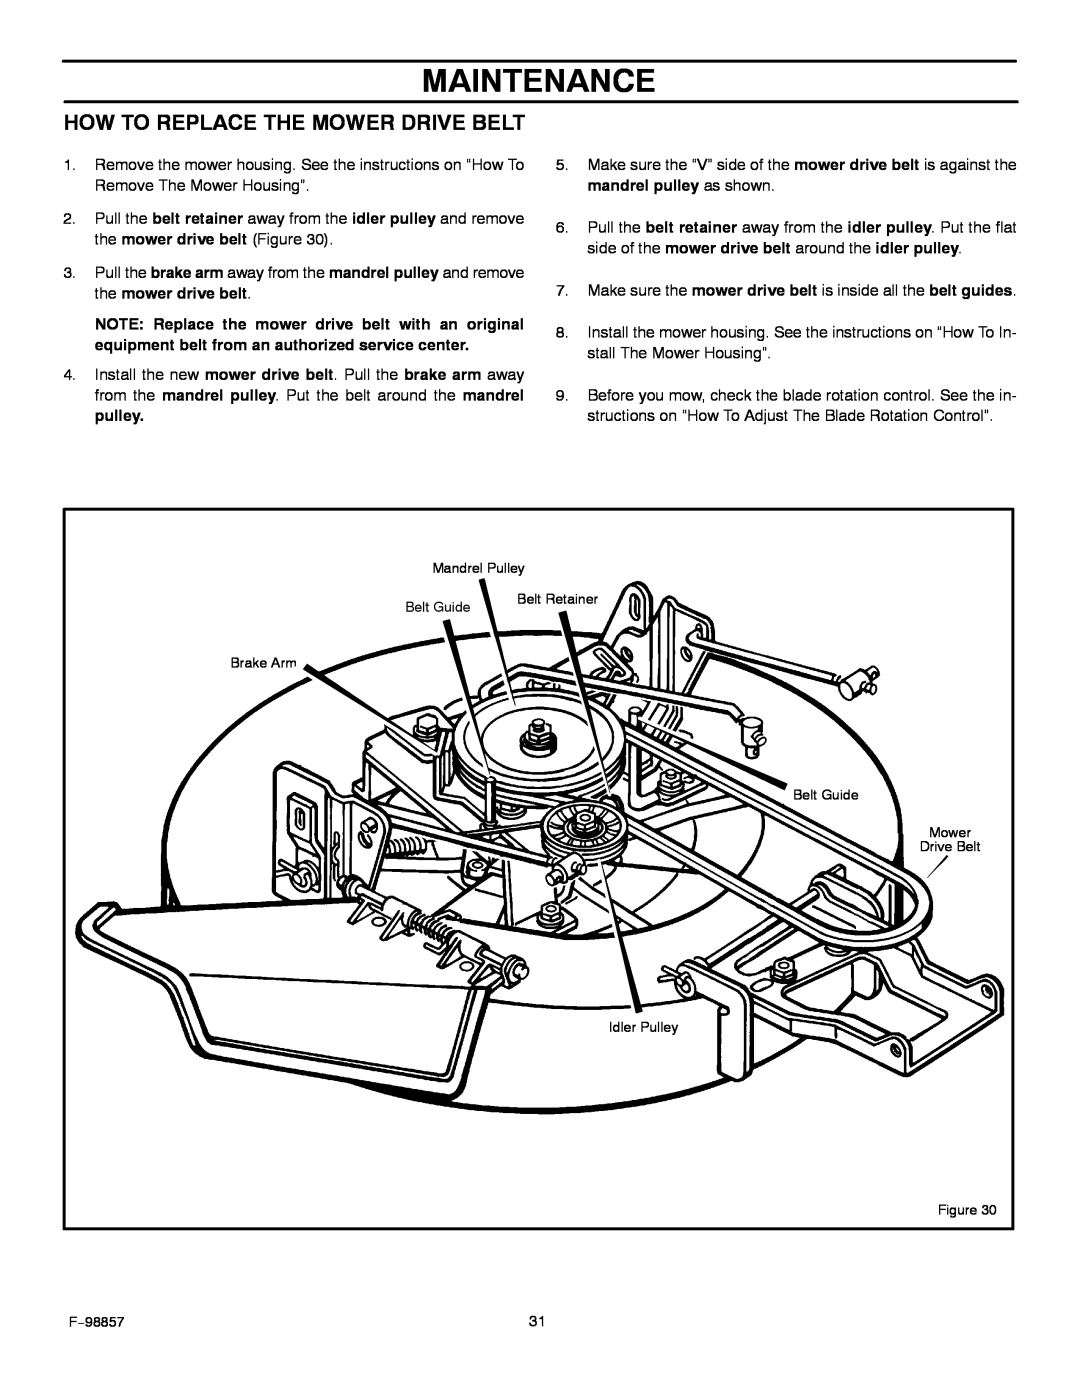 Hayter Mowers 30-Dec manual How To Replace The Mower Drive Belt, Maintenance 